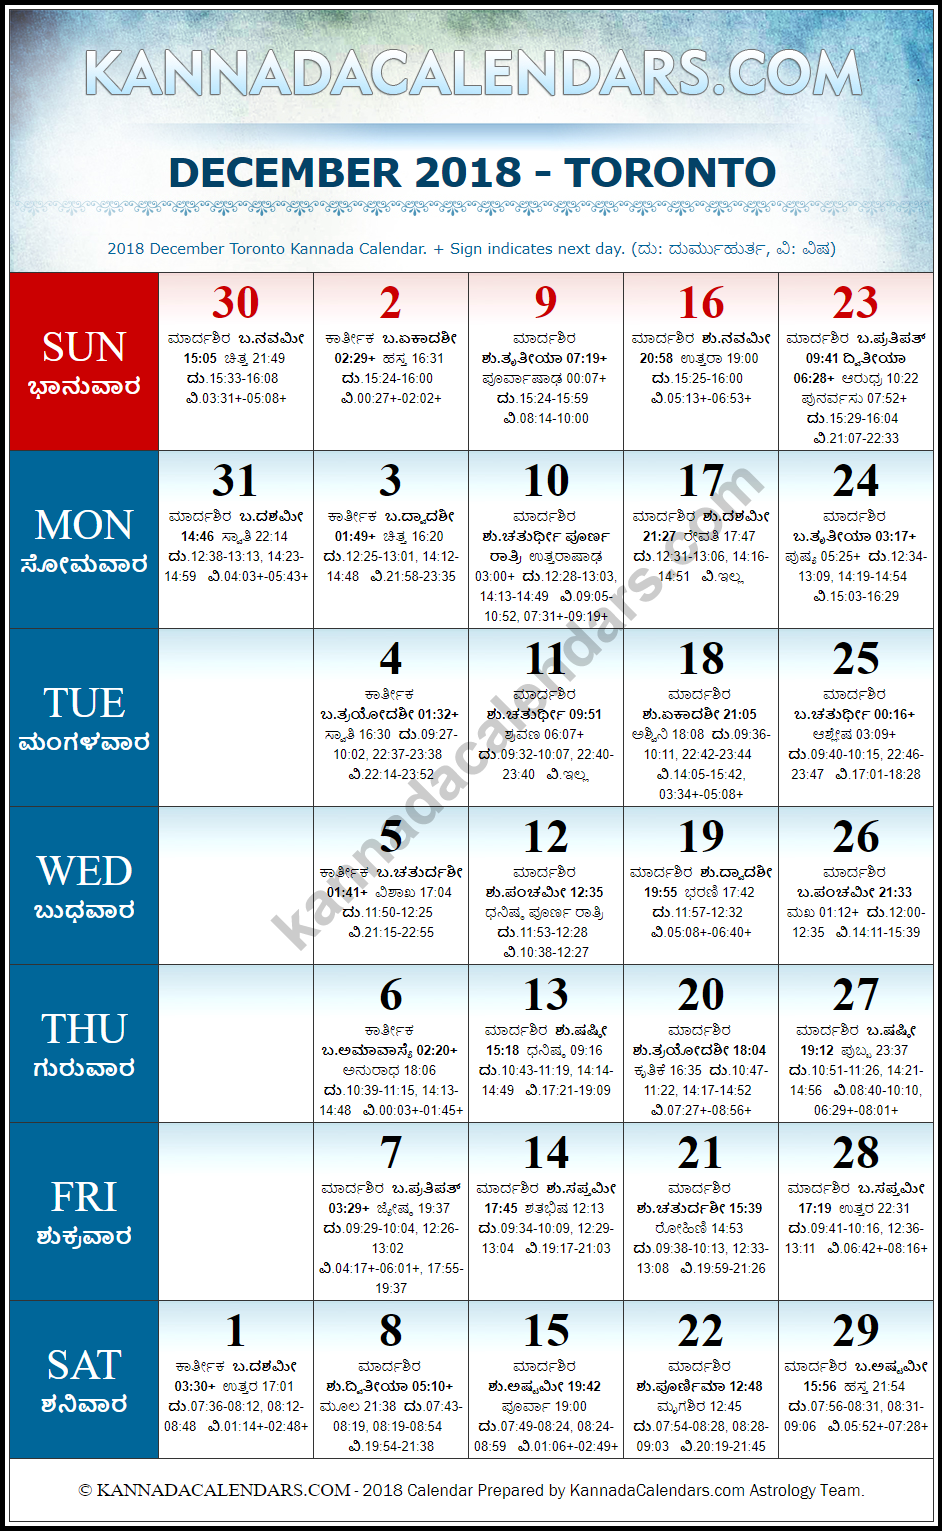 December 2018 Kannada Calendar for Toronto, Canada